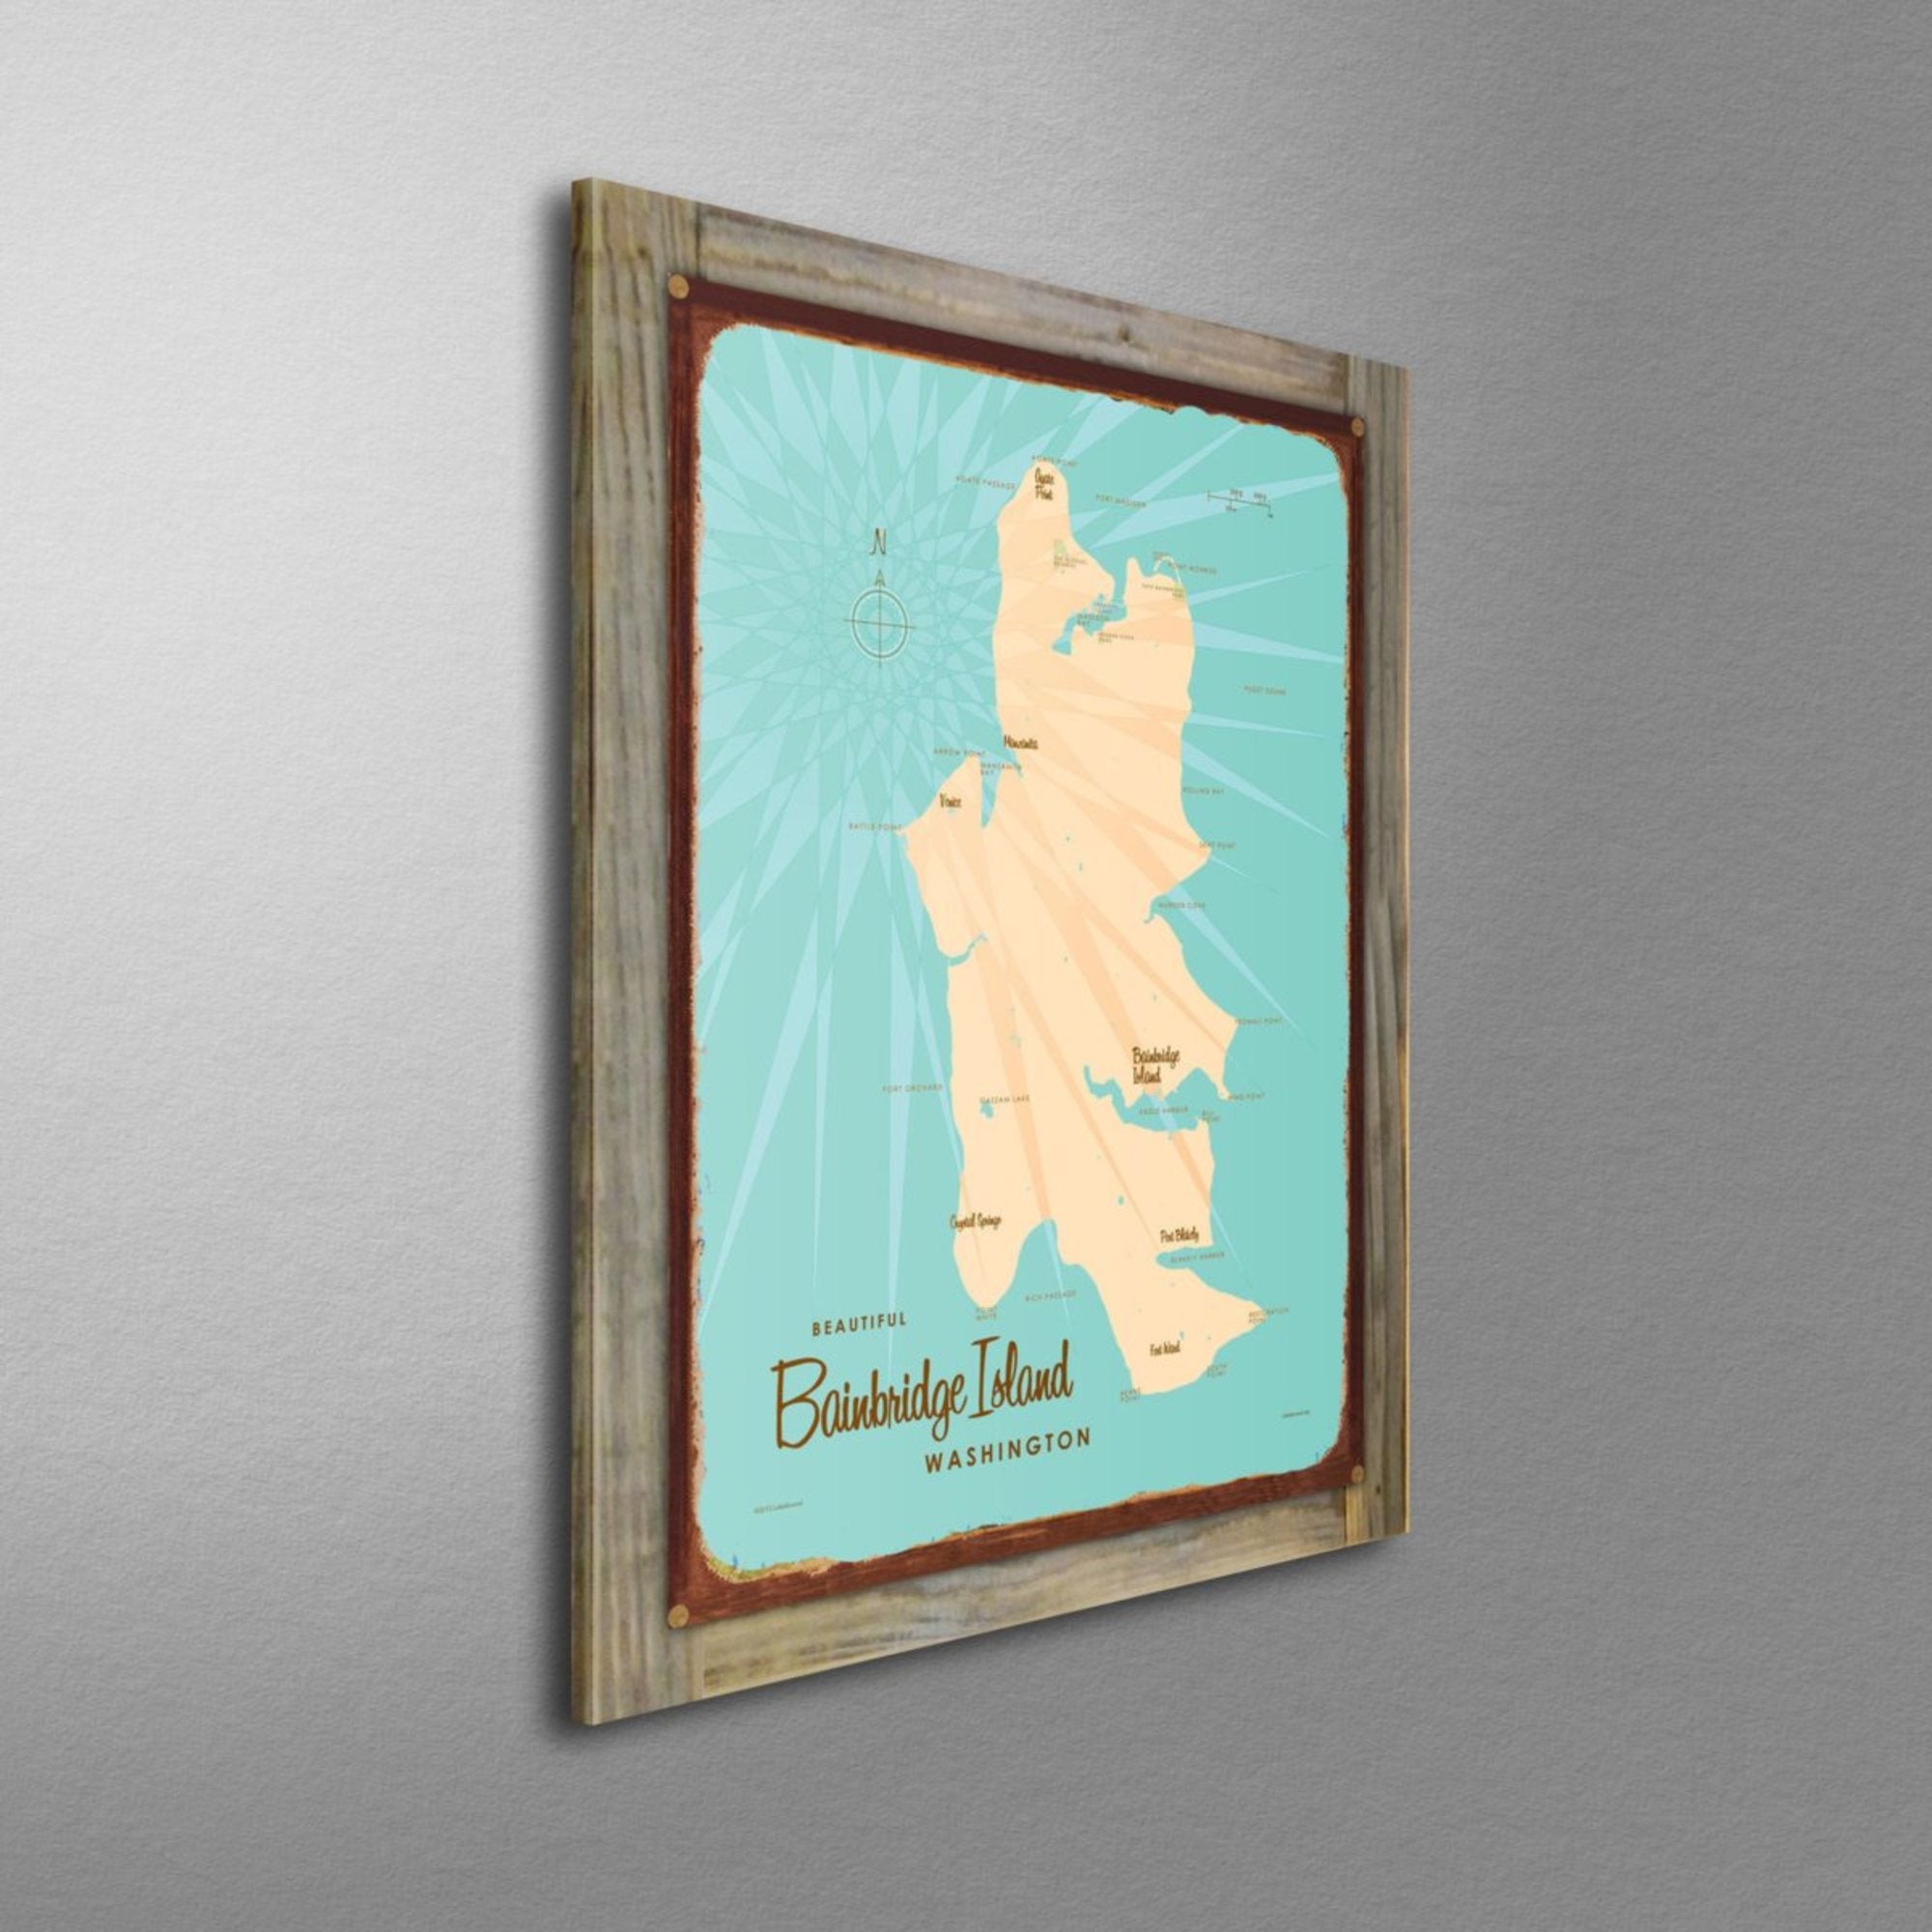 Bainbridge Island Washington, Wood-Mounted Rustic Metal Sign Map Art